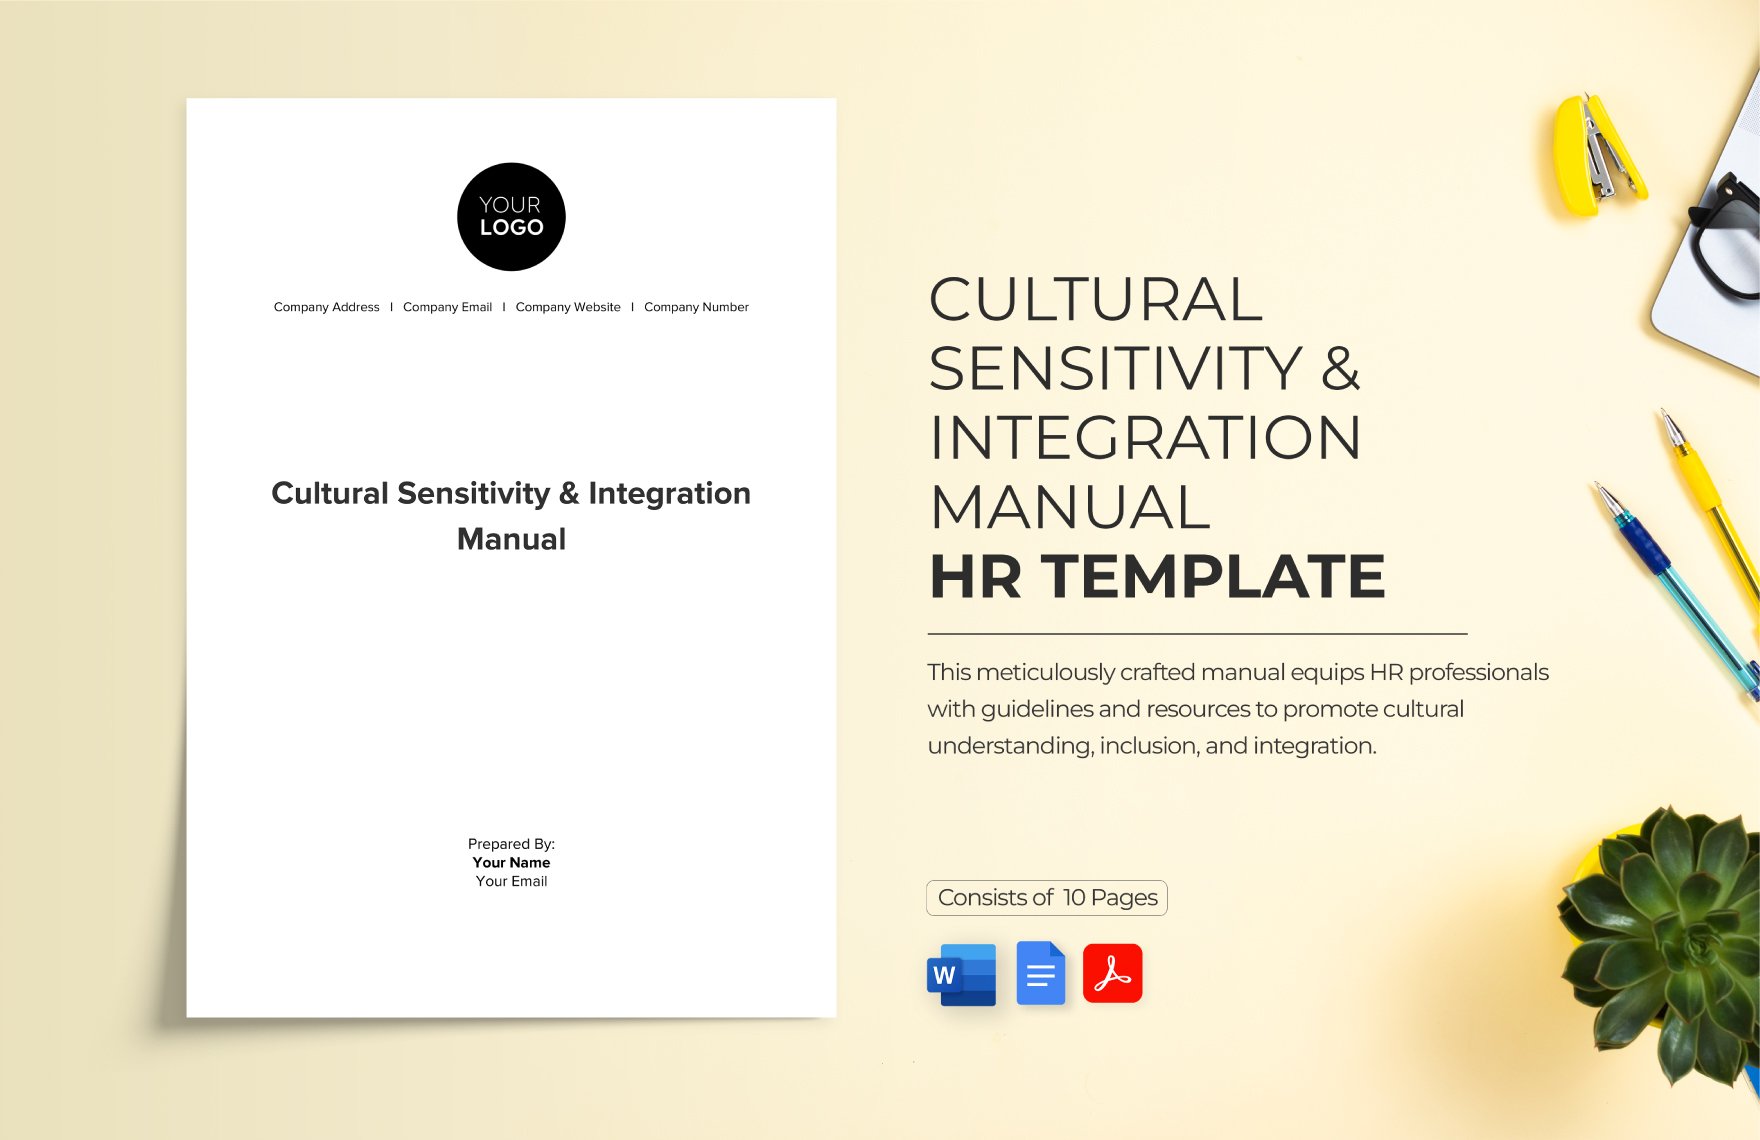 Cultural Sensitivity & Integration Manual HR Template